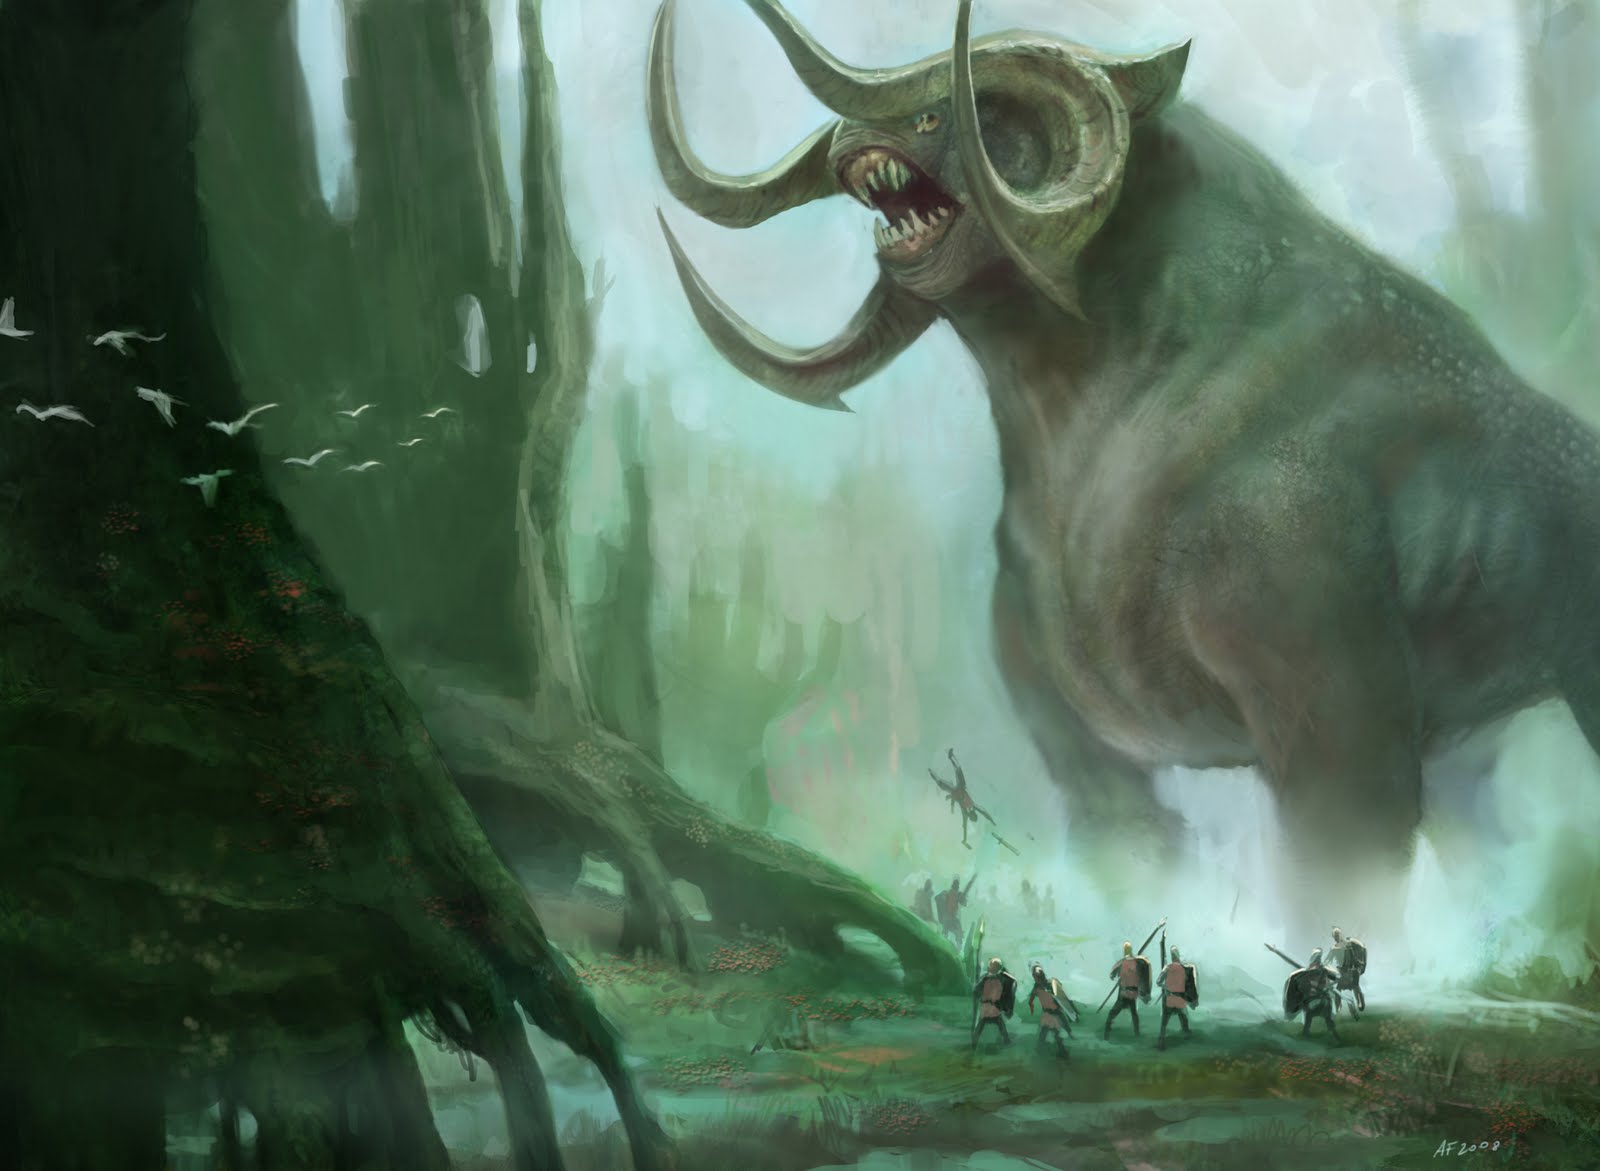 giant mythical creature wallpaper   ForWallpapercom